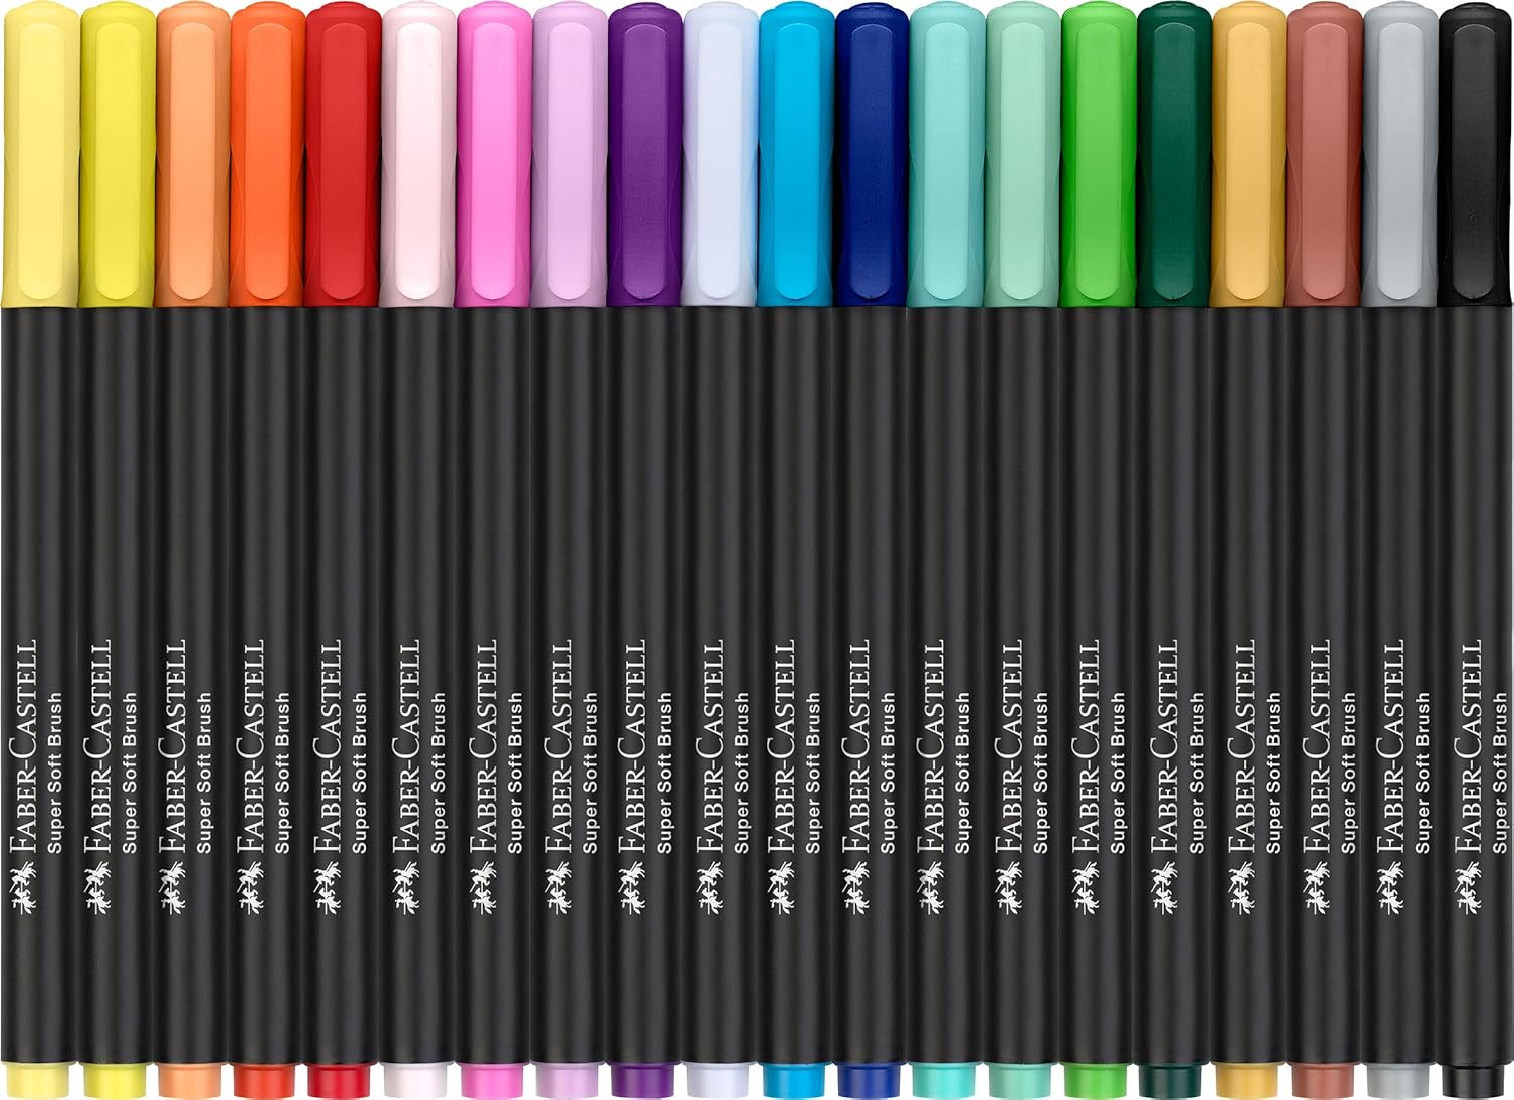 Faber Castell Brush Pen Set - Black Edition, Cardboard Box of 20, 116452